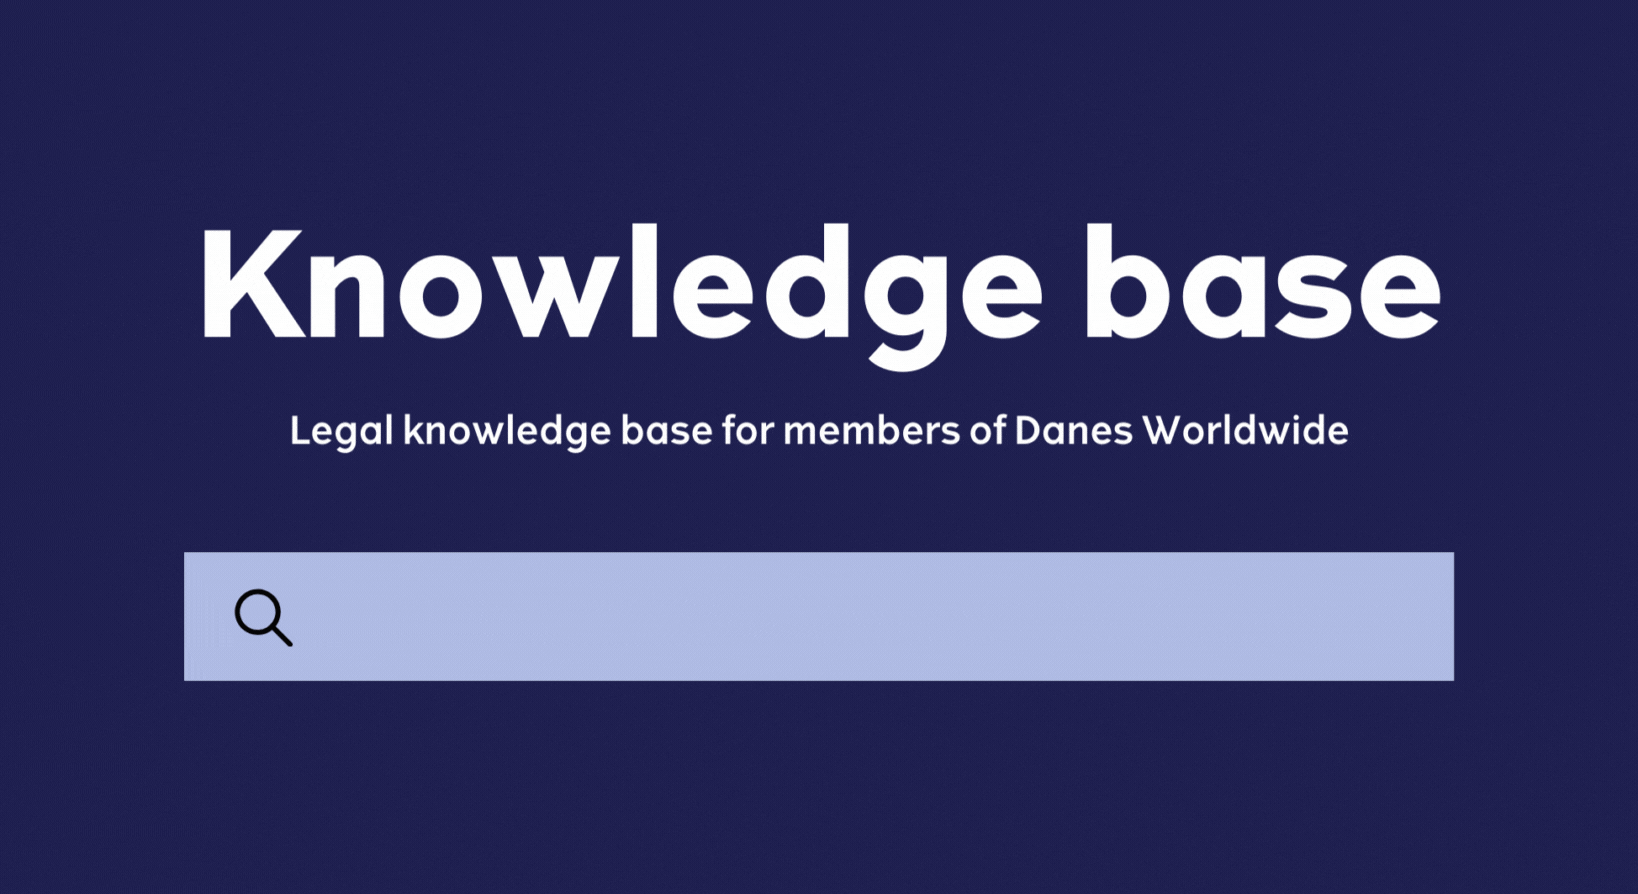 Danes Worldwide Knowledge base